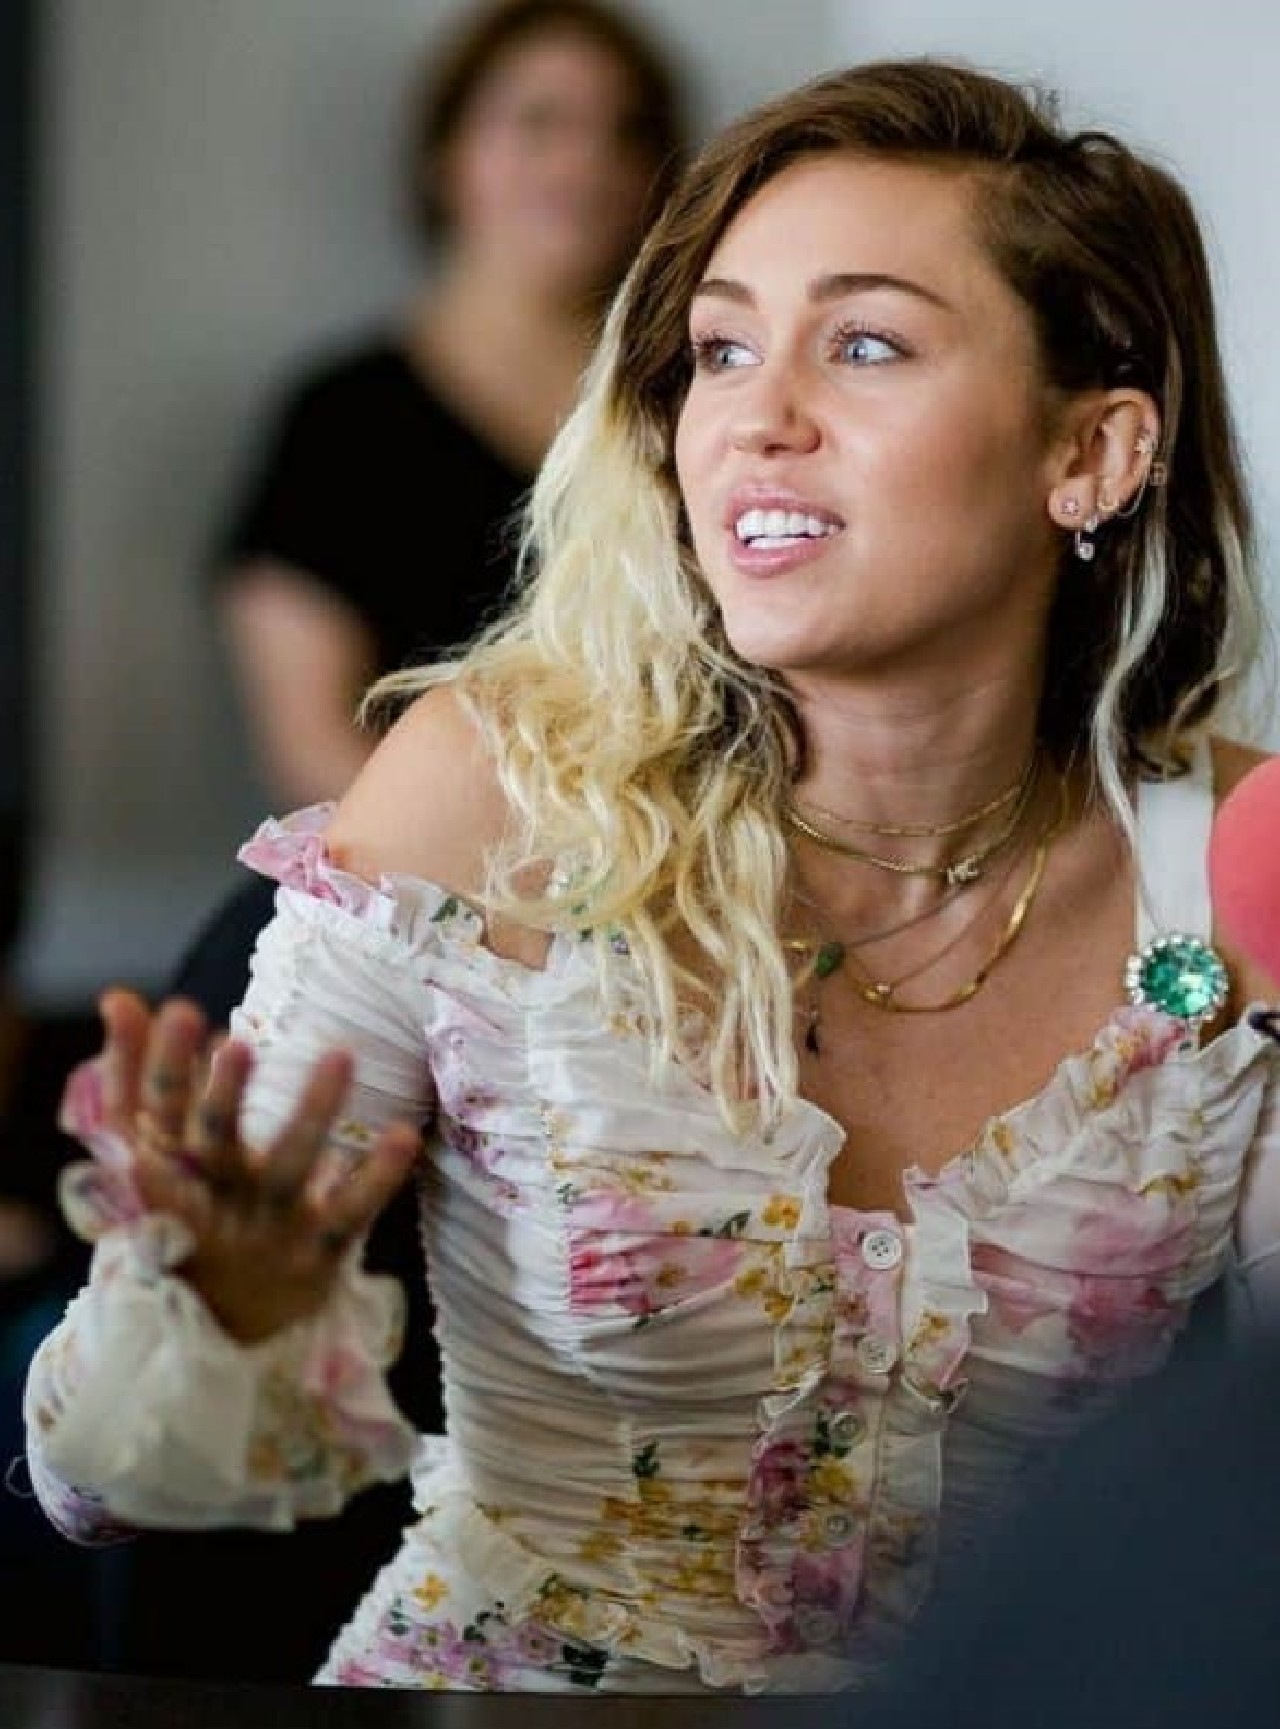 Miley Cyrus Captivates in 104.3 MYfm Studios with Her Stylish LA Vibe